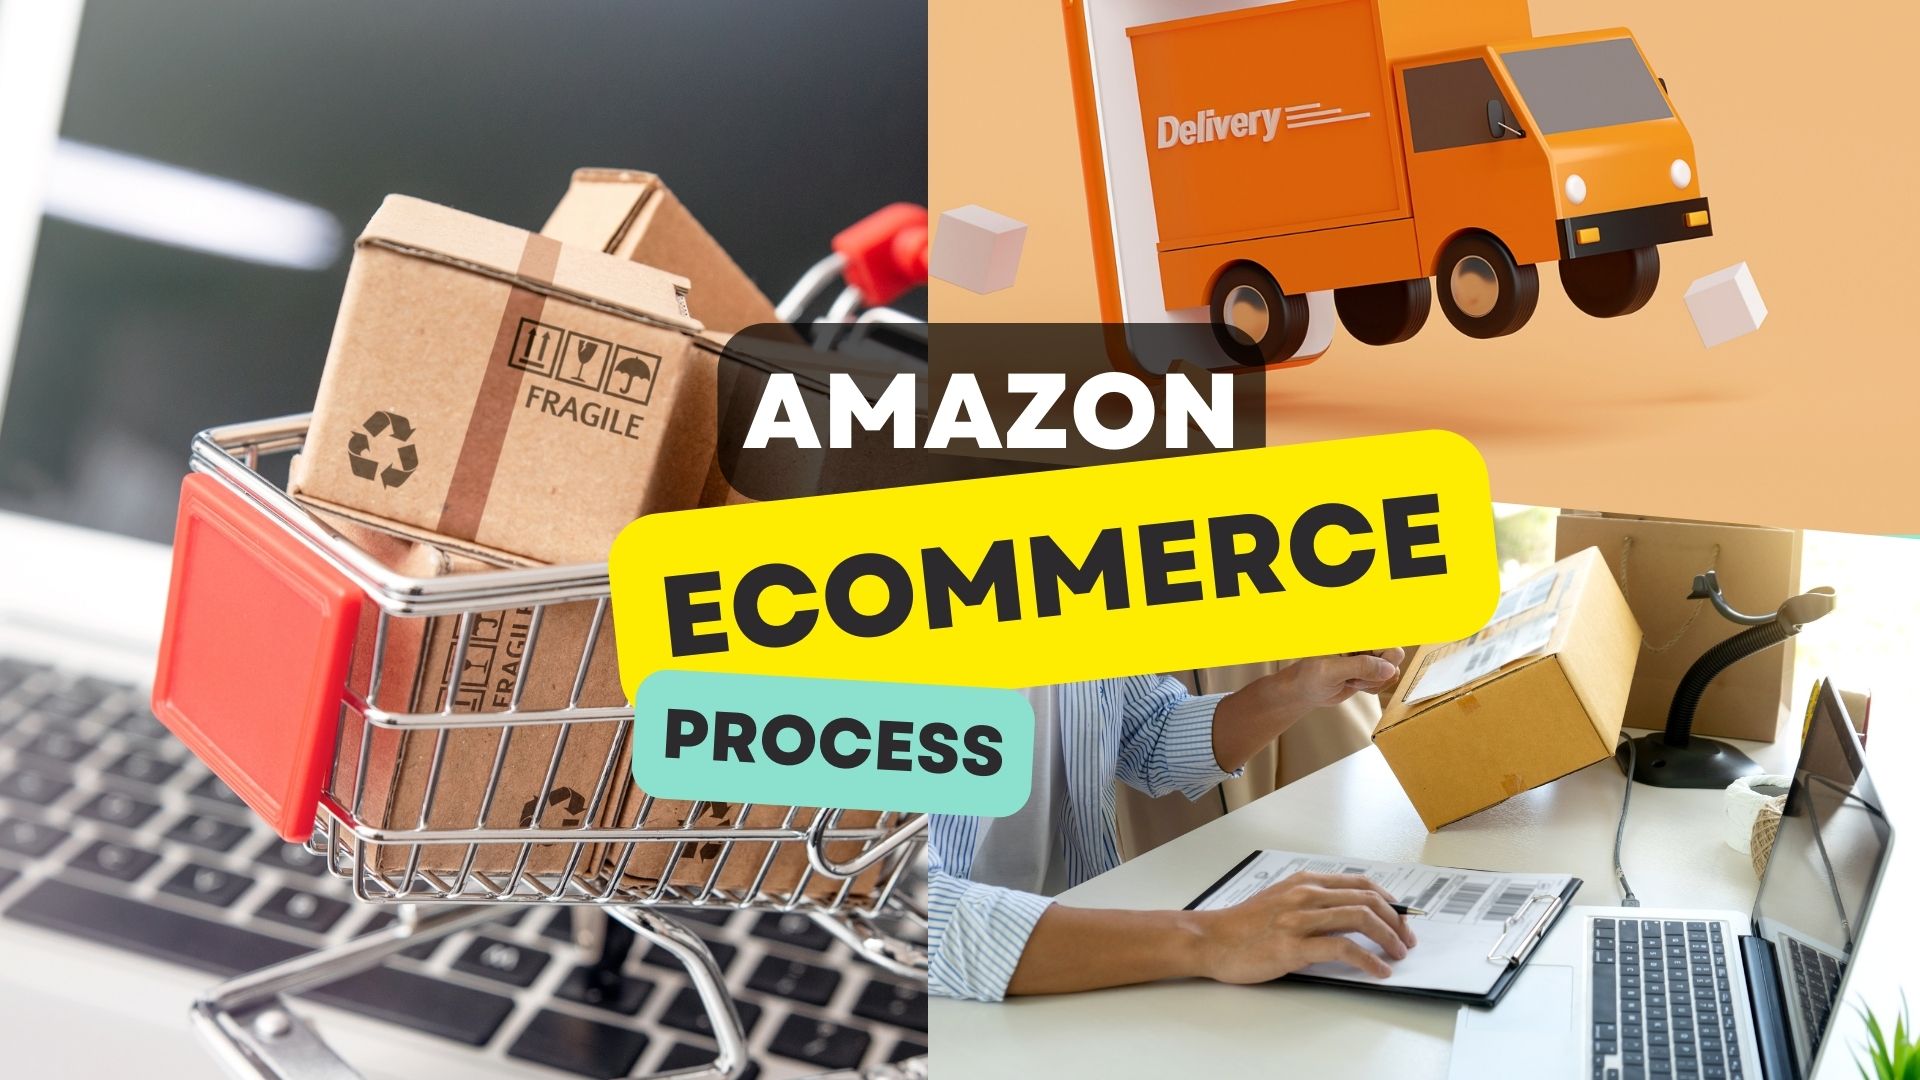 Amazon Ecommerce Process